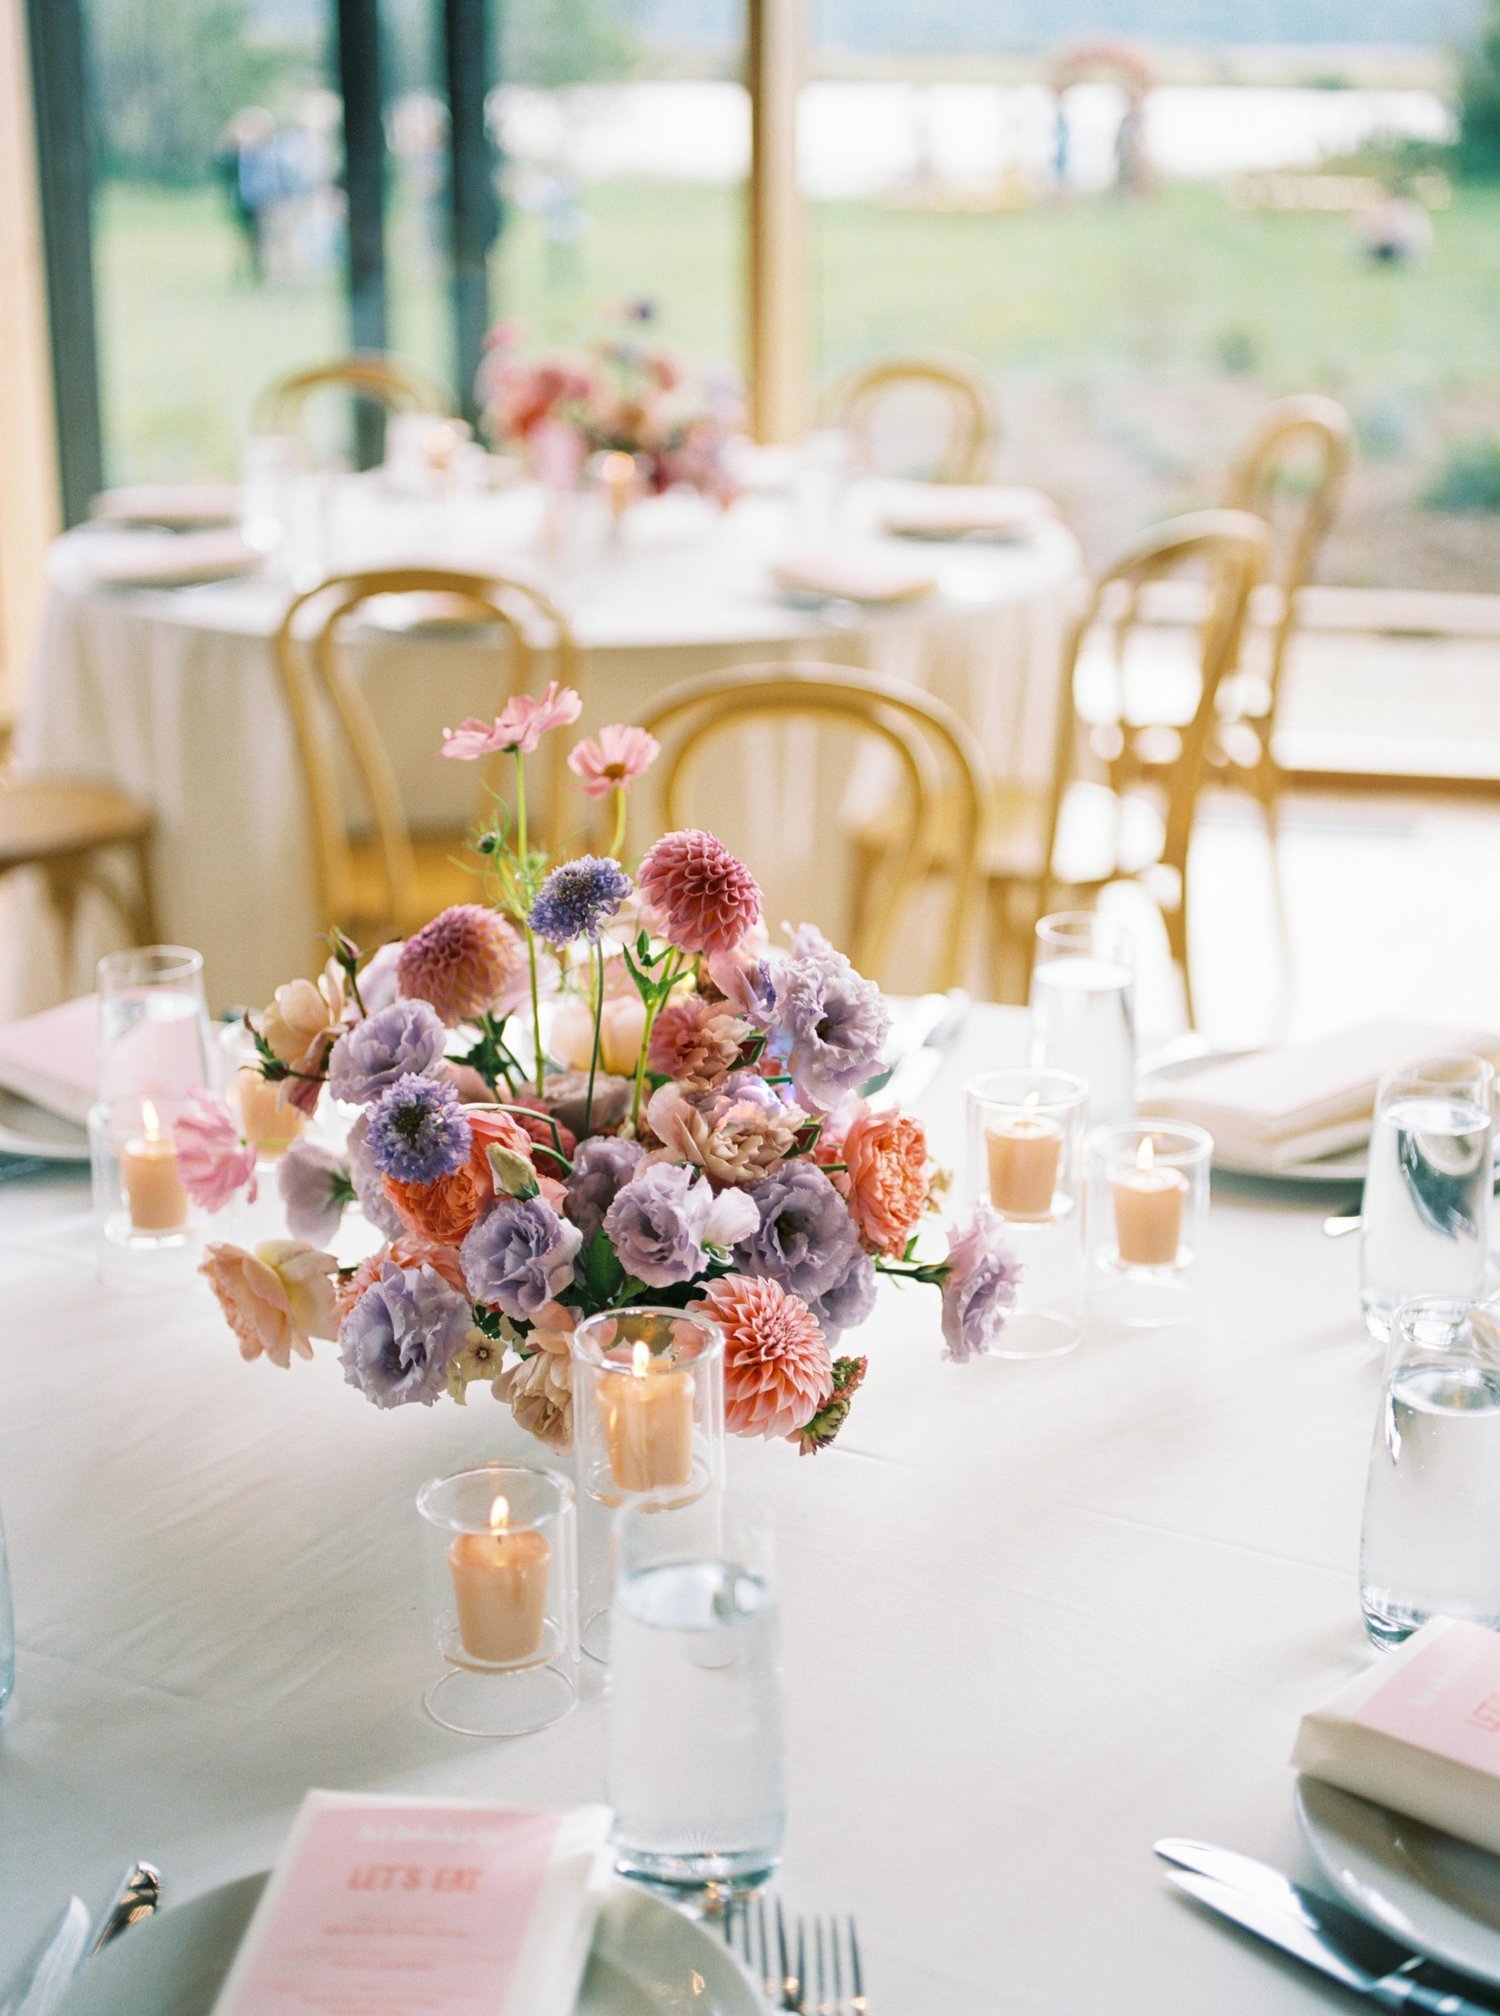 natural-floral-designs-for-wedding-reception-tables.jpg